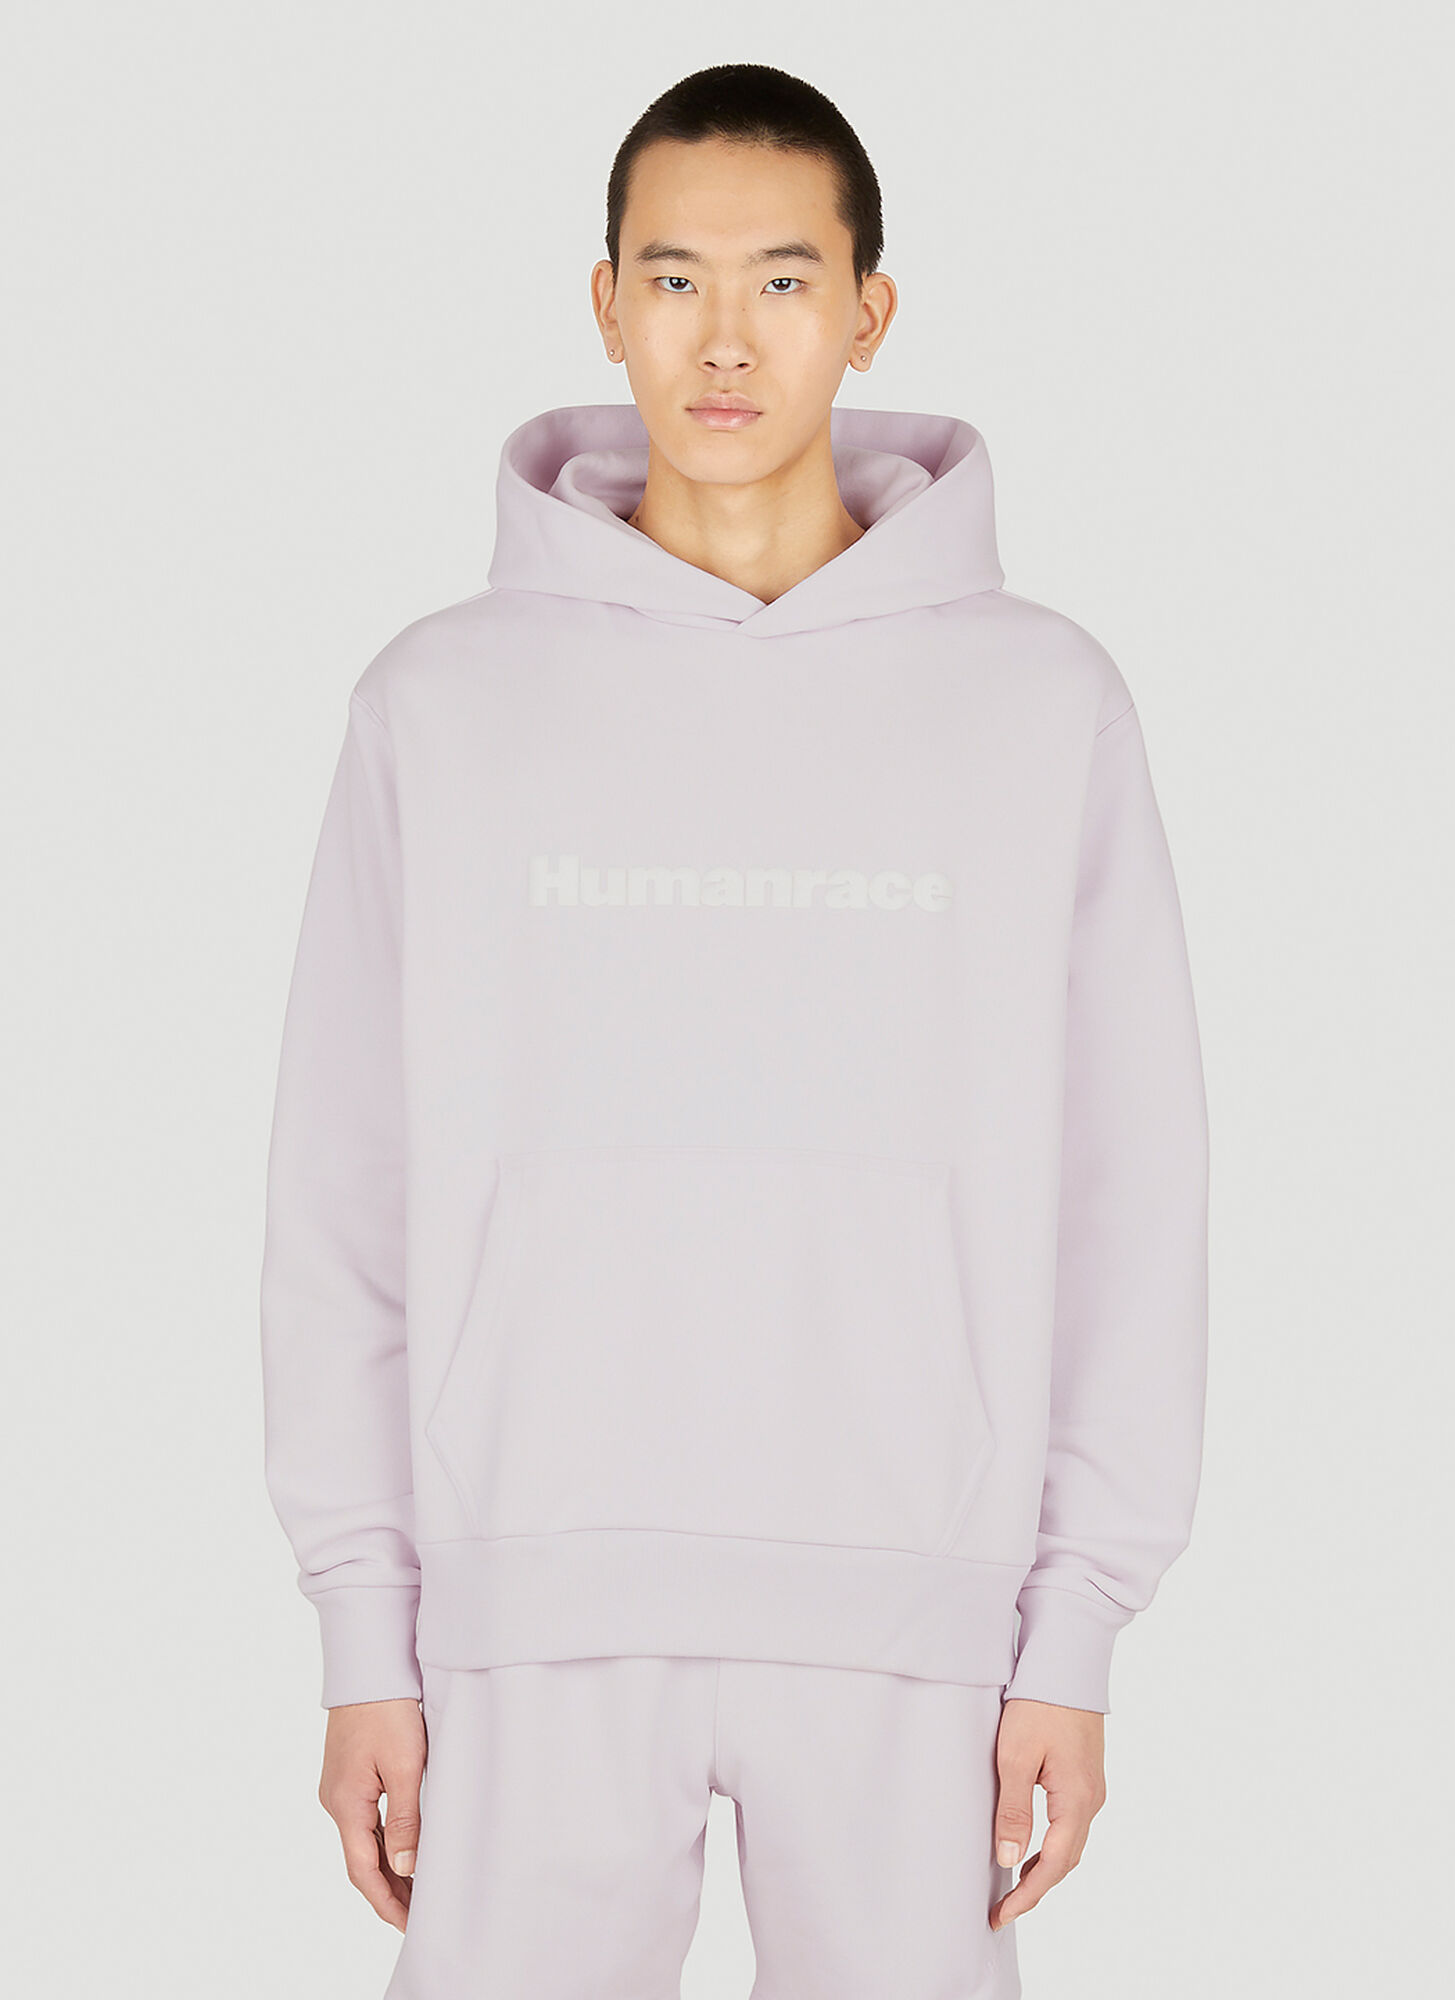 Adidas X Humanrace Basics Hooded Sweatshirt In Lilac